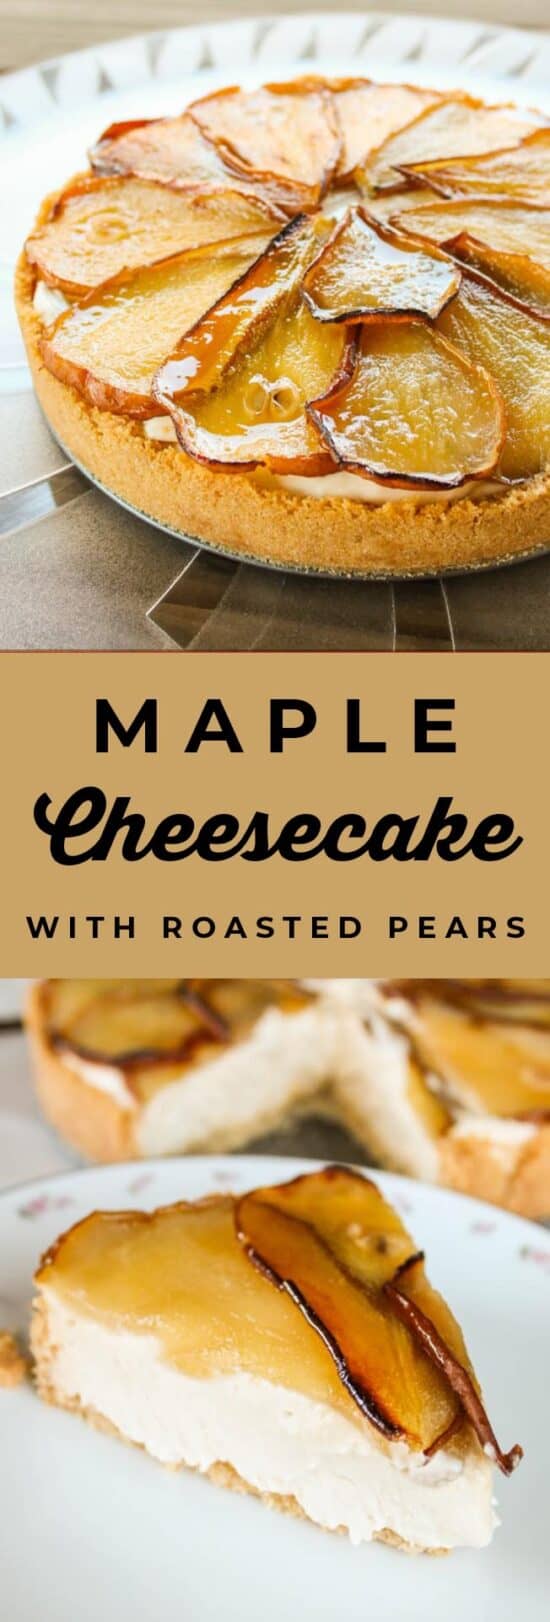 maple cheesecake